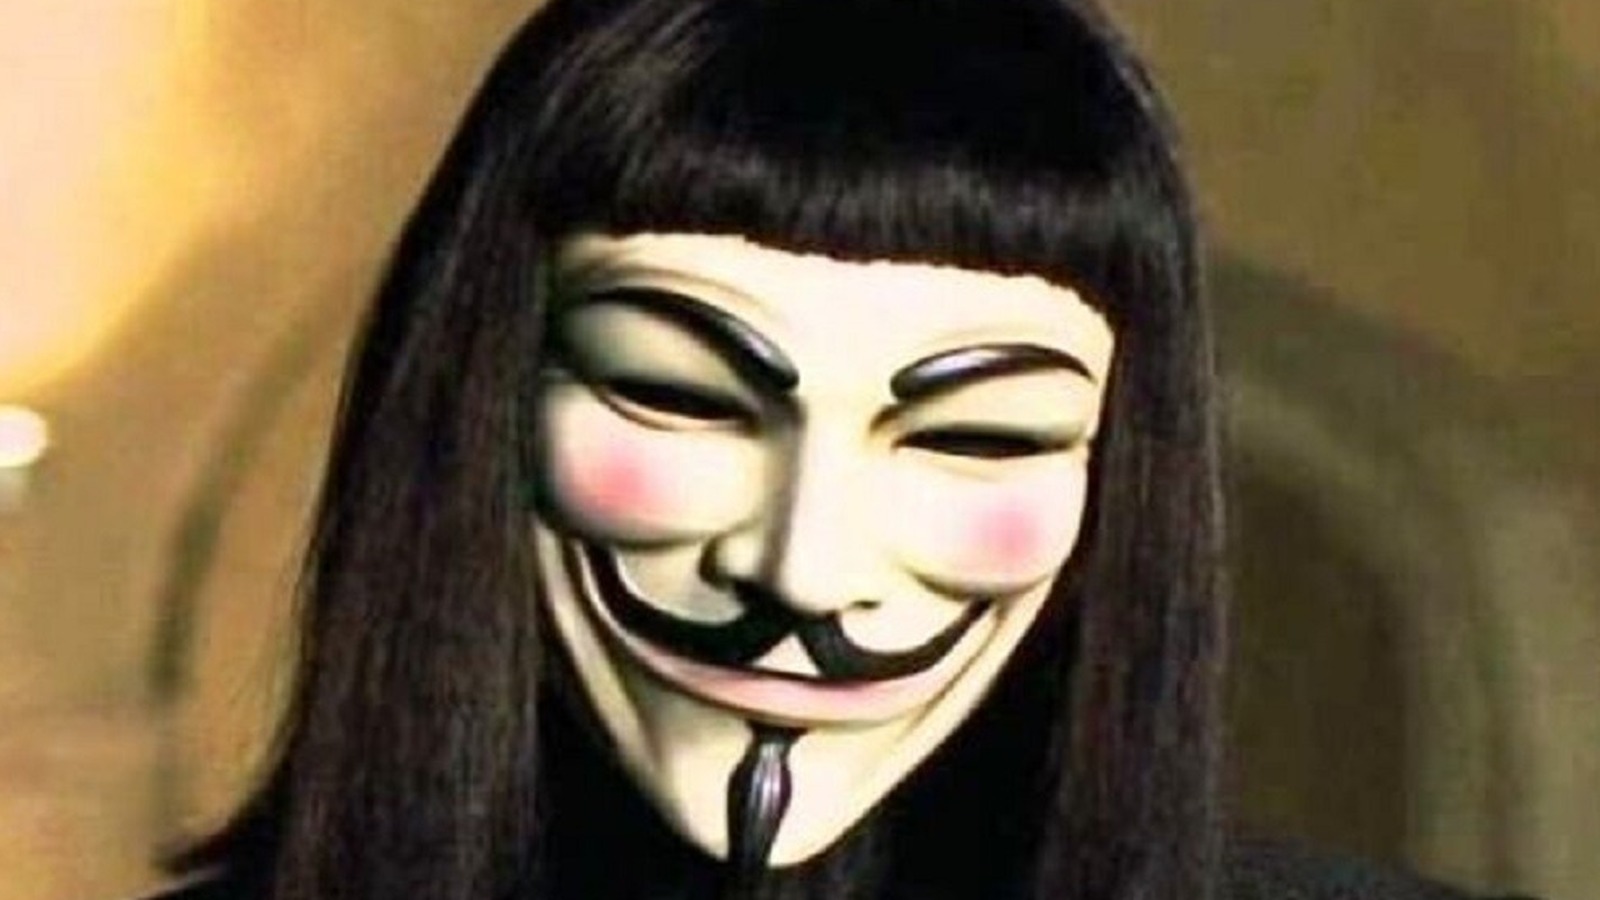 Evey and V (V for Vendetta) - Natalie Portman and Hugo Weaving